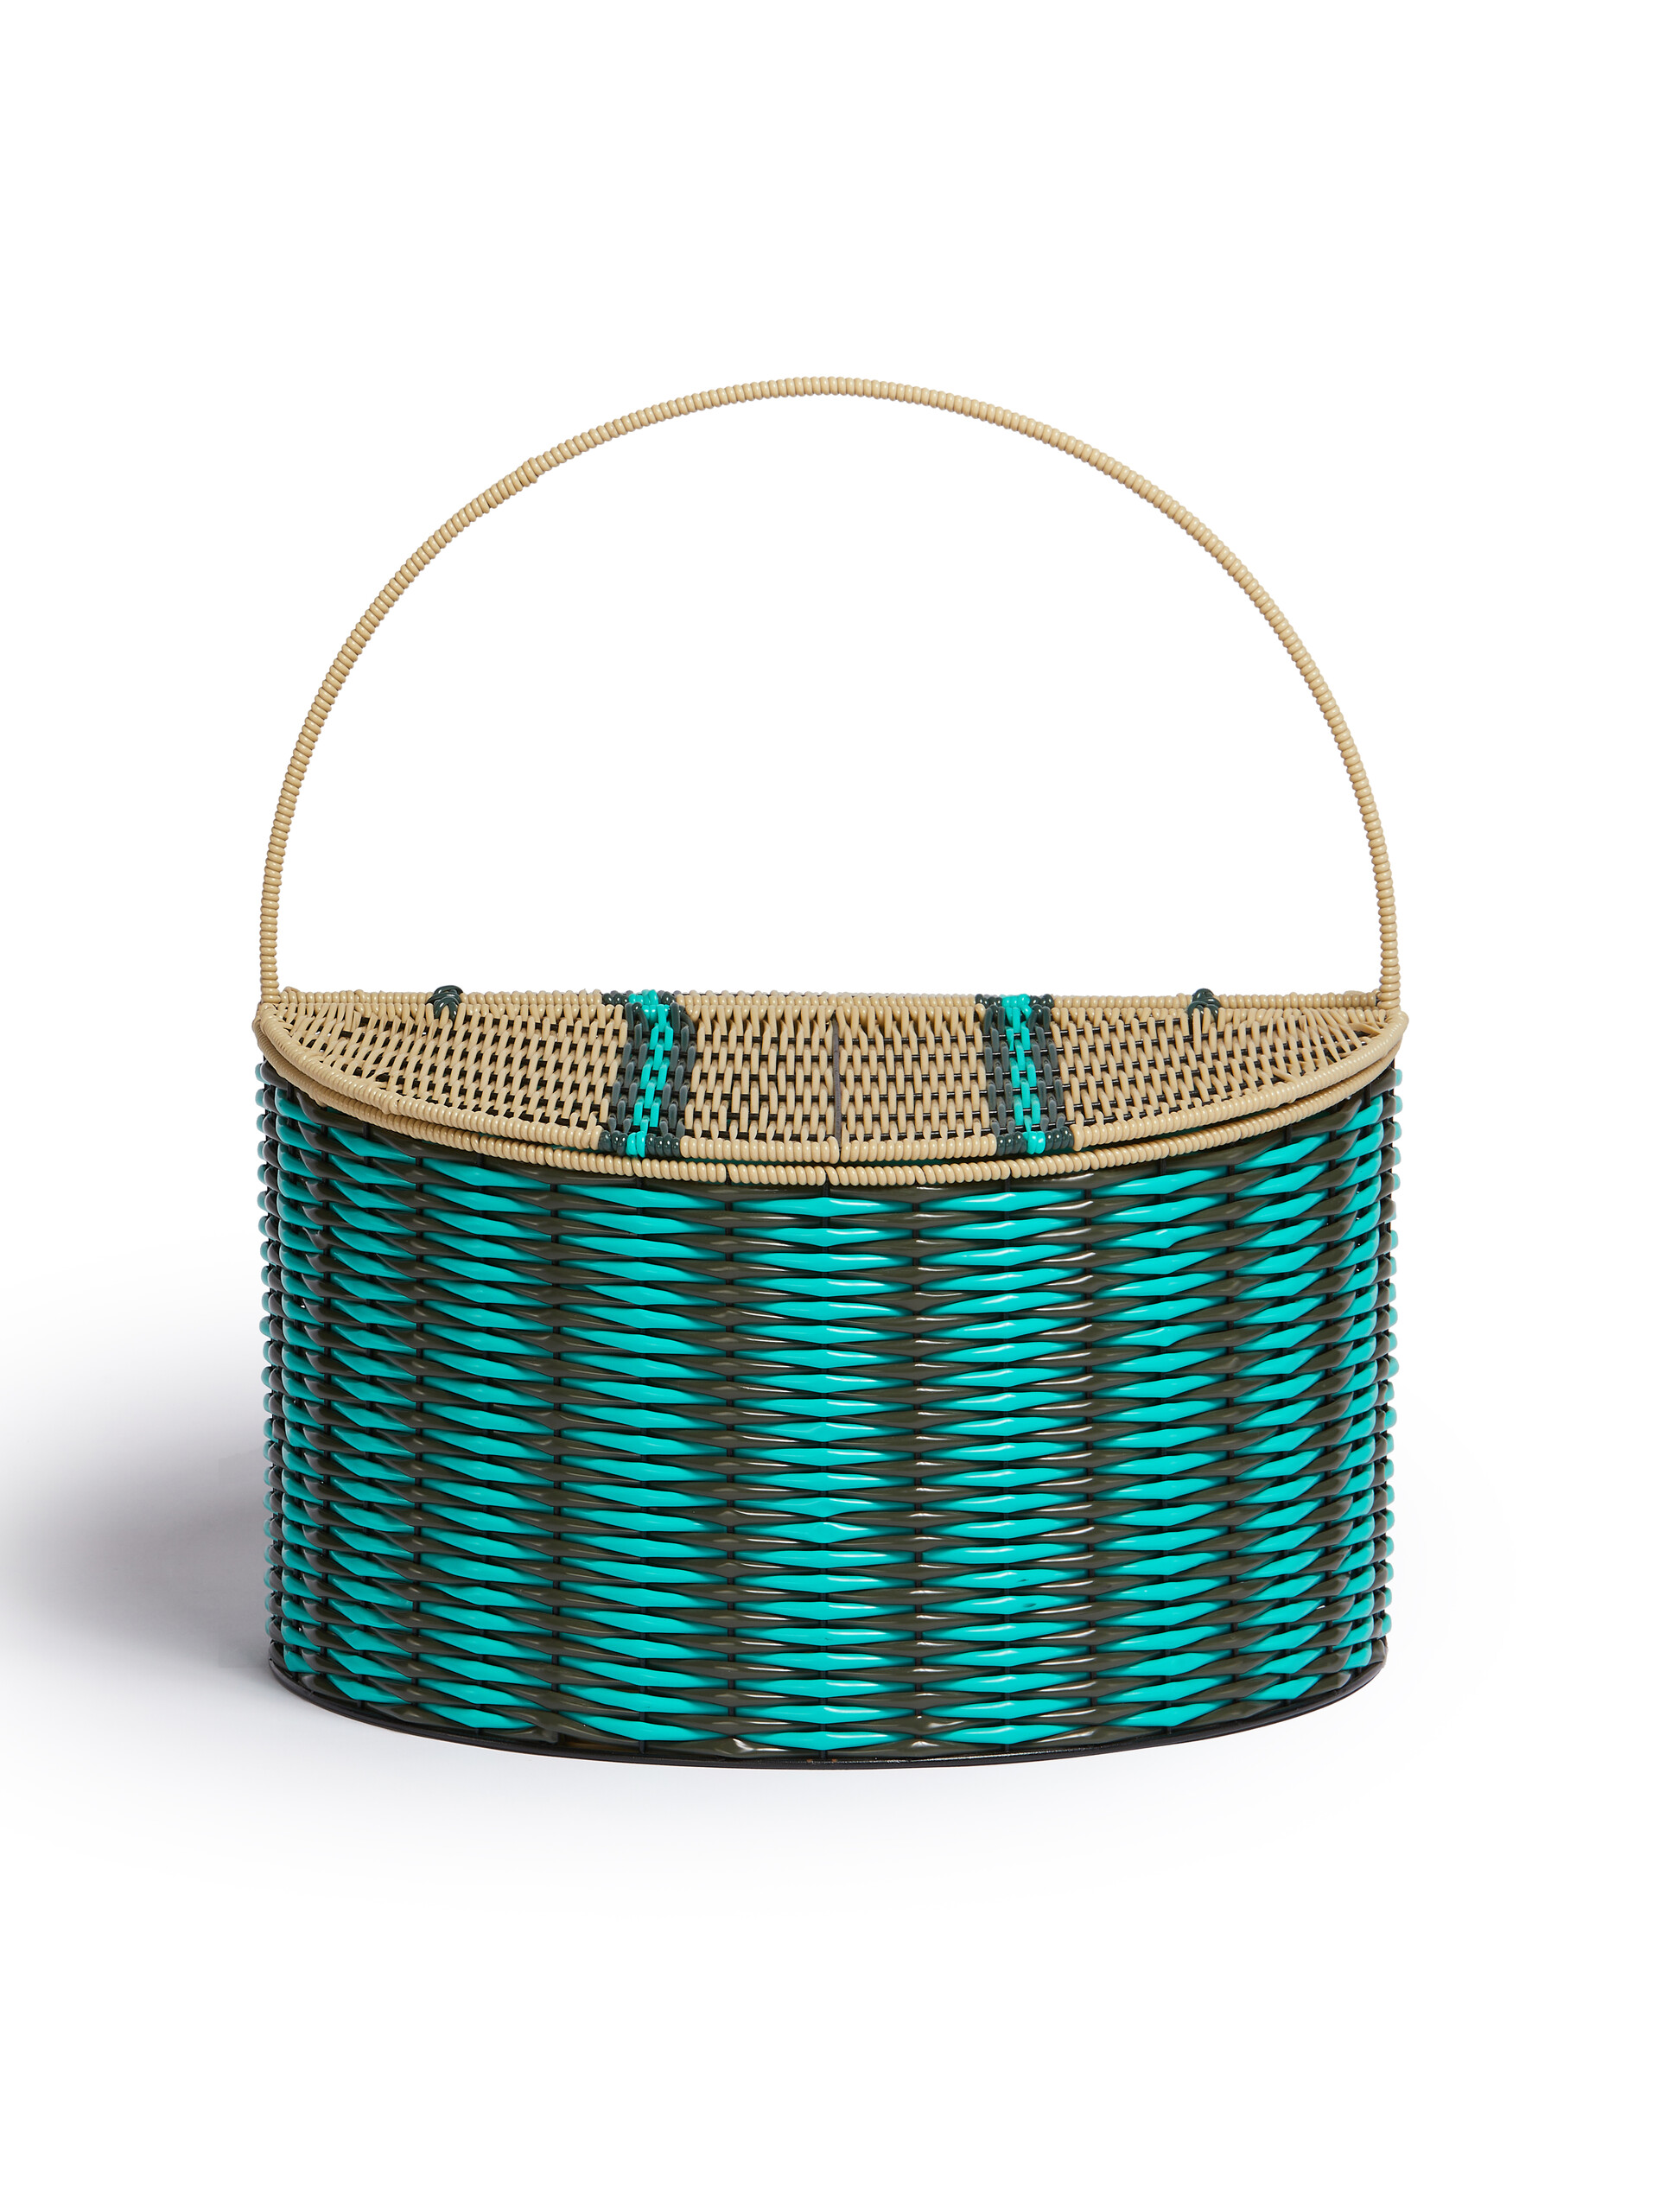 Green MARNI MARKET woven cable picnic basket - Accessories - Image 3